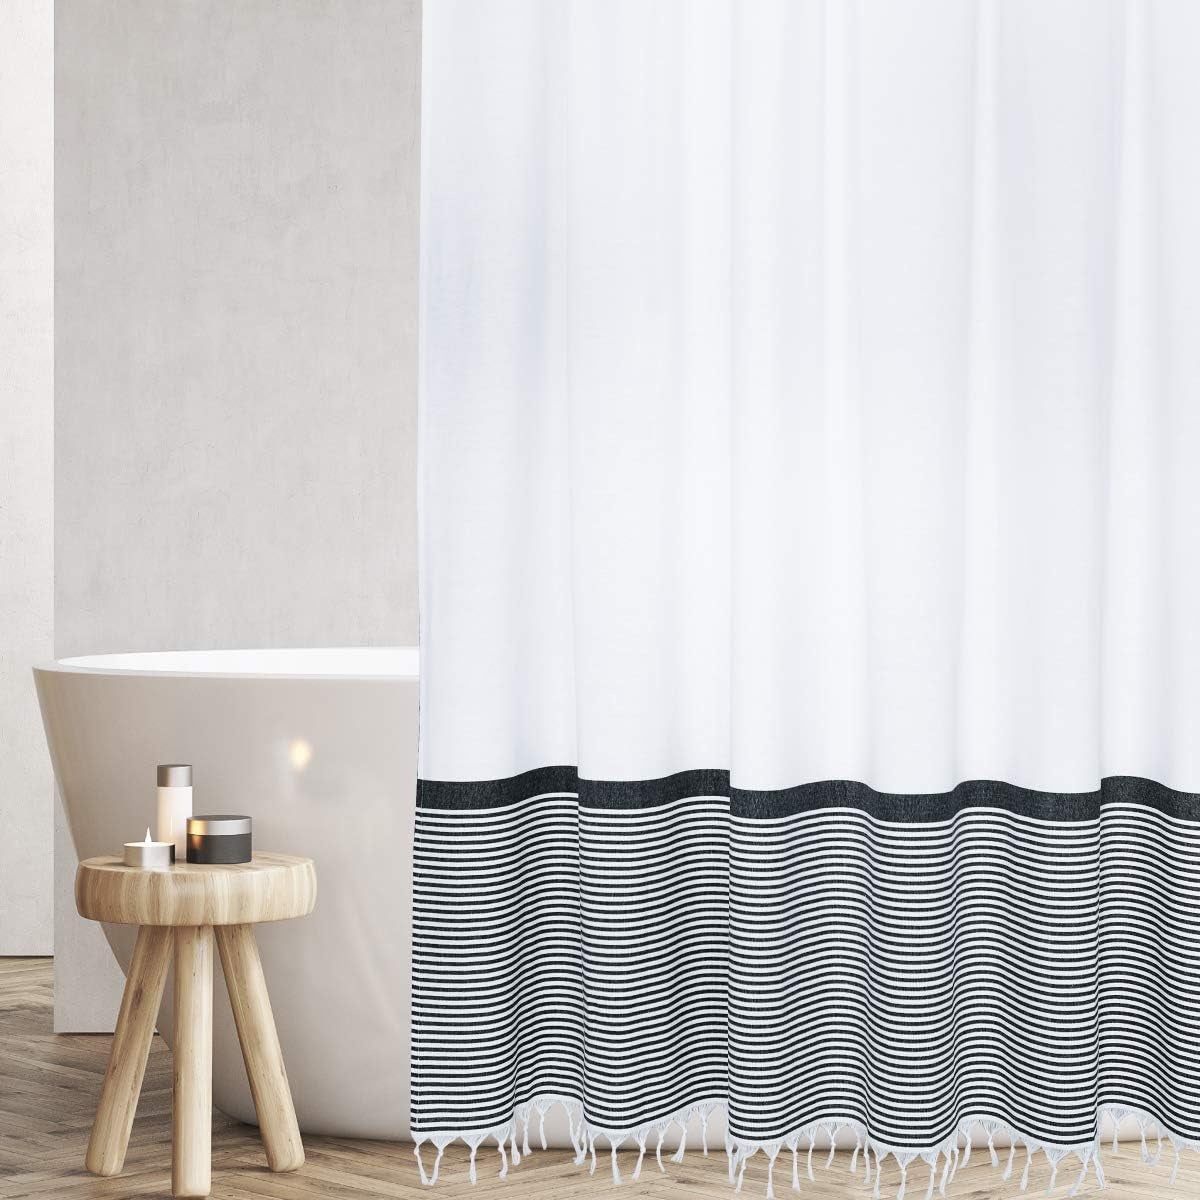 HALL & PERRY Modern Farmhouse Tassel Shower Curtain 100% Cotton Striped Fabric Shower Curtain with Tassels for Bathroom Décor (Black 5, 72"X72")